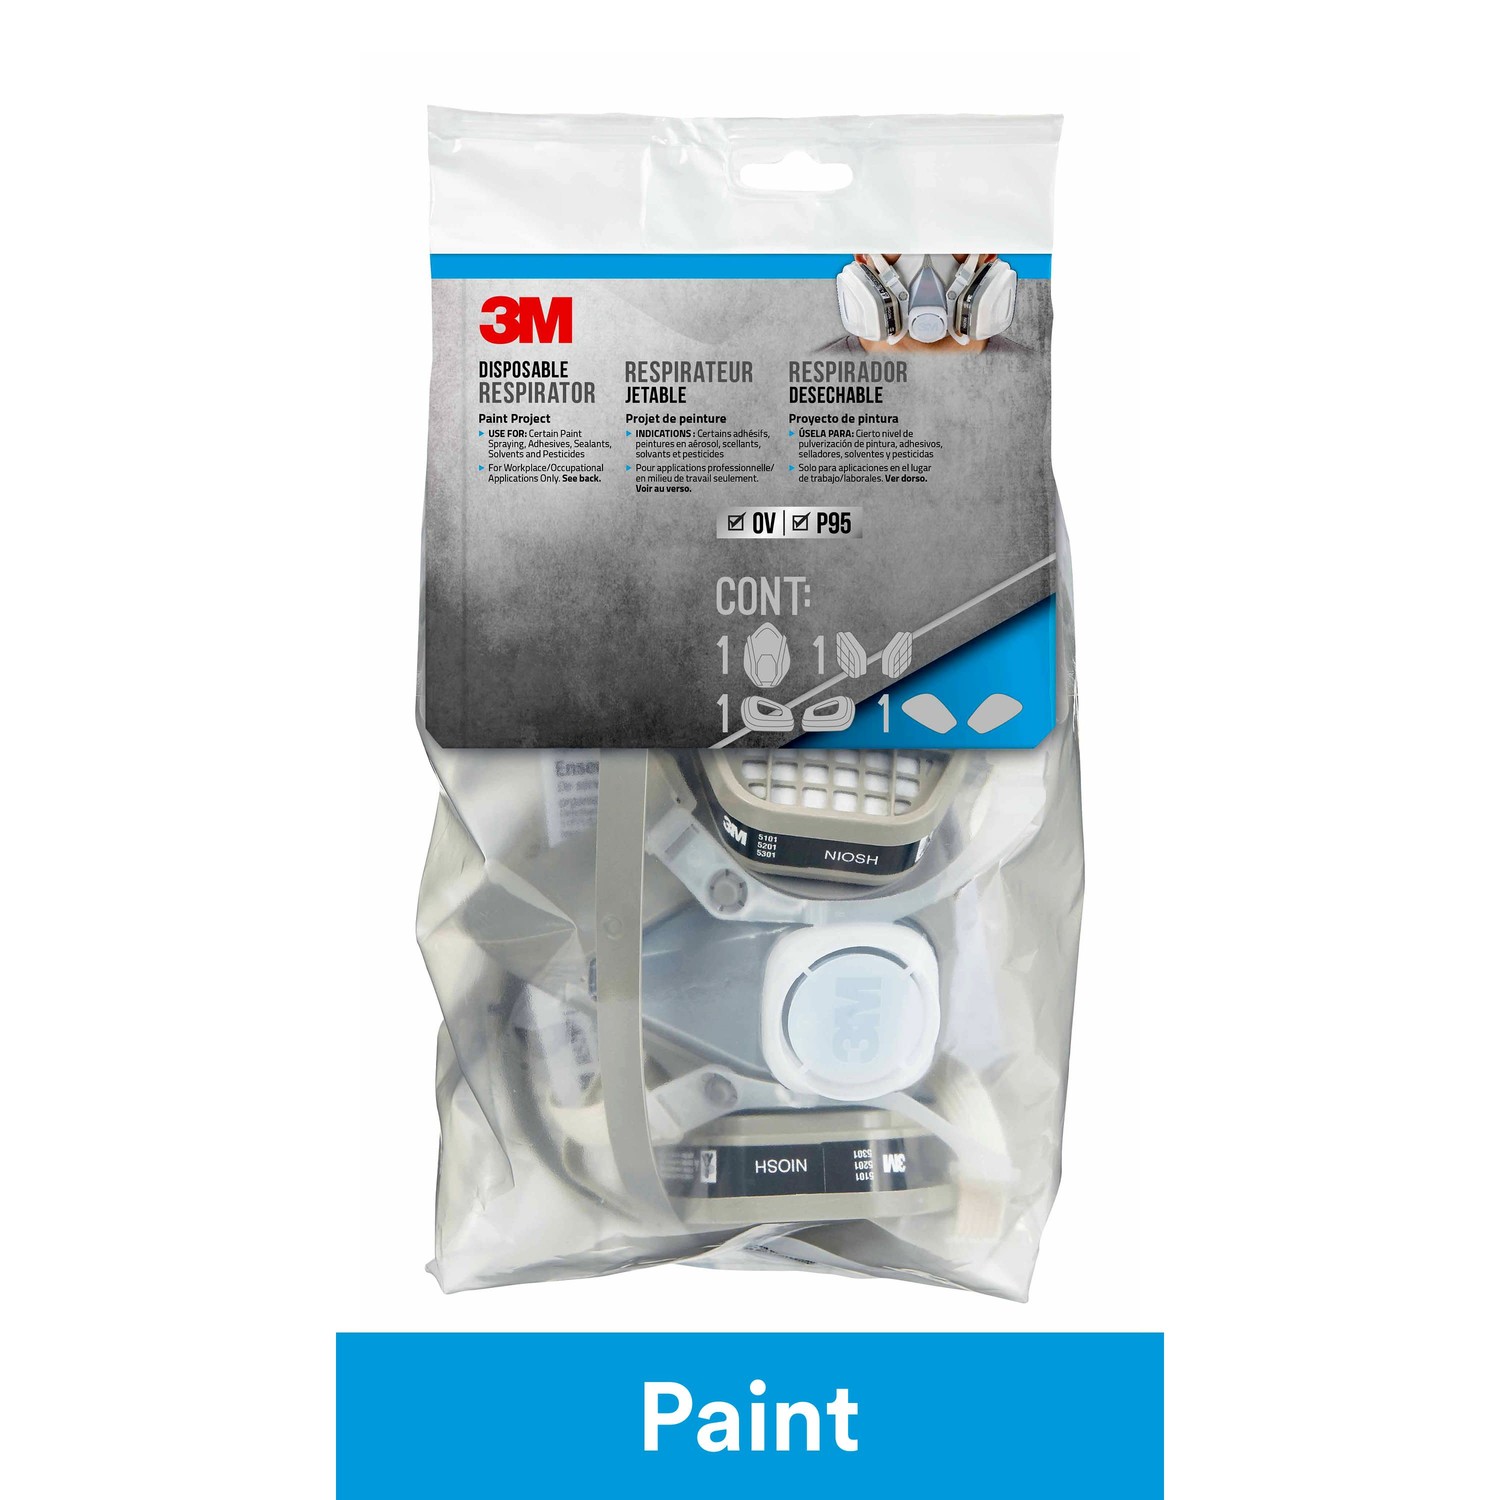 Paint/Pesticide Respirator